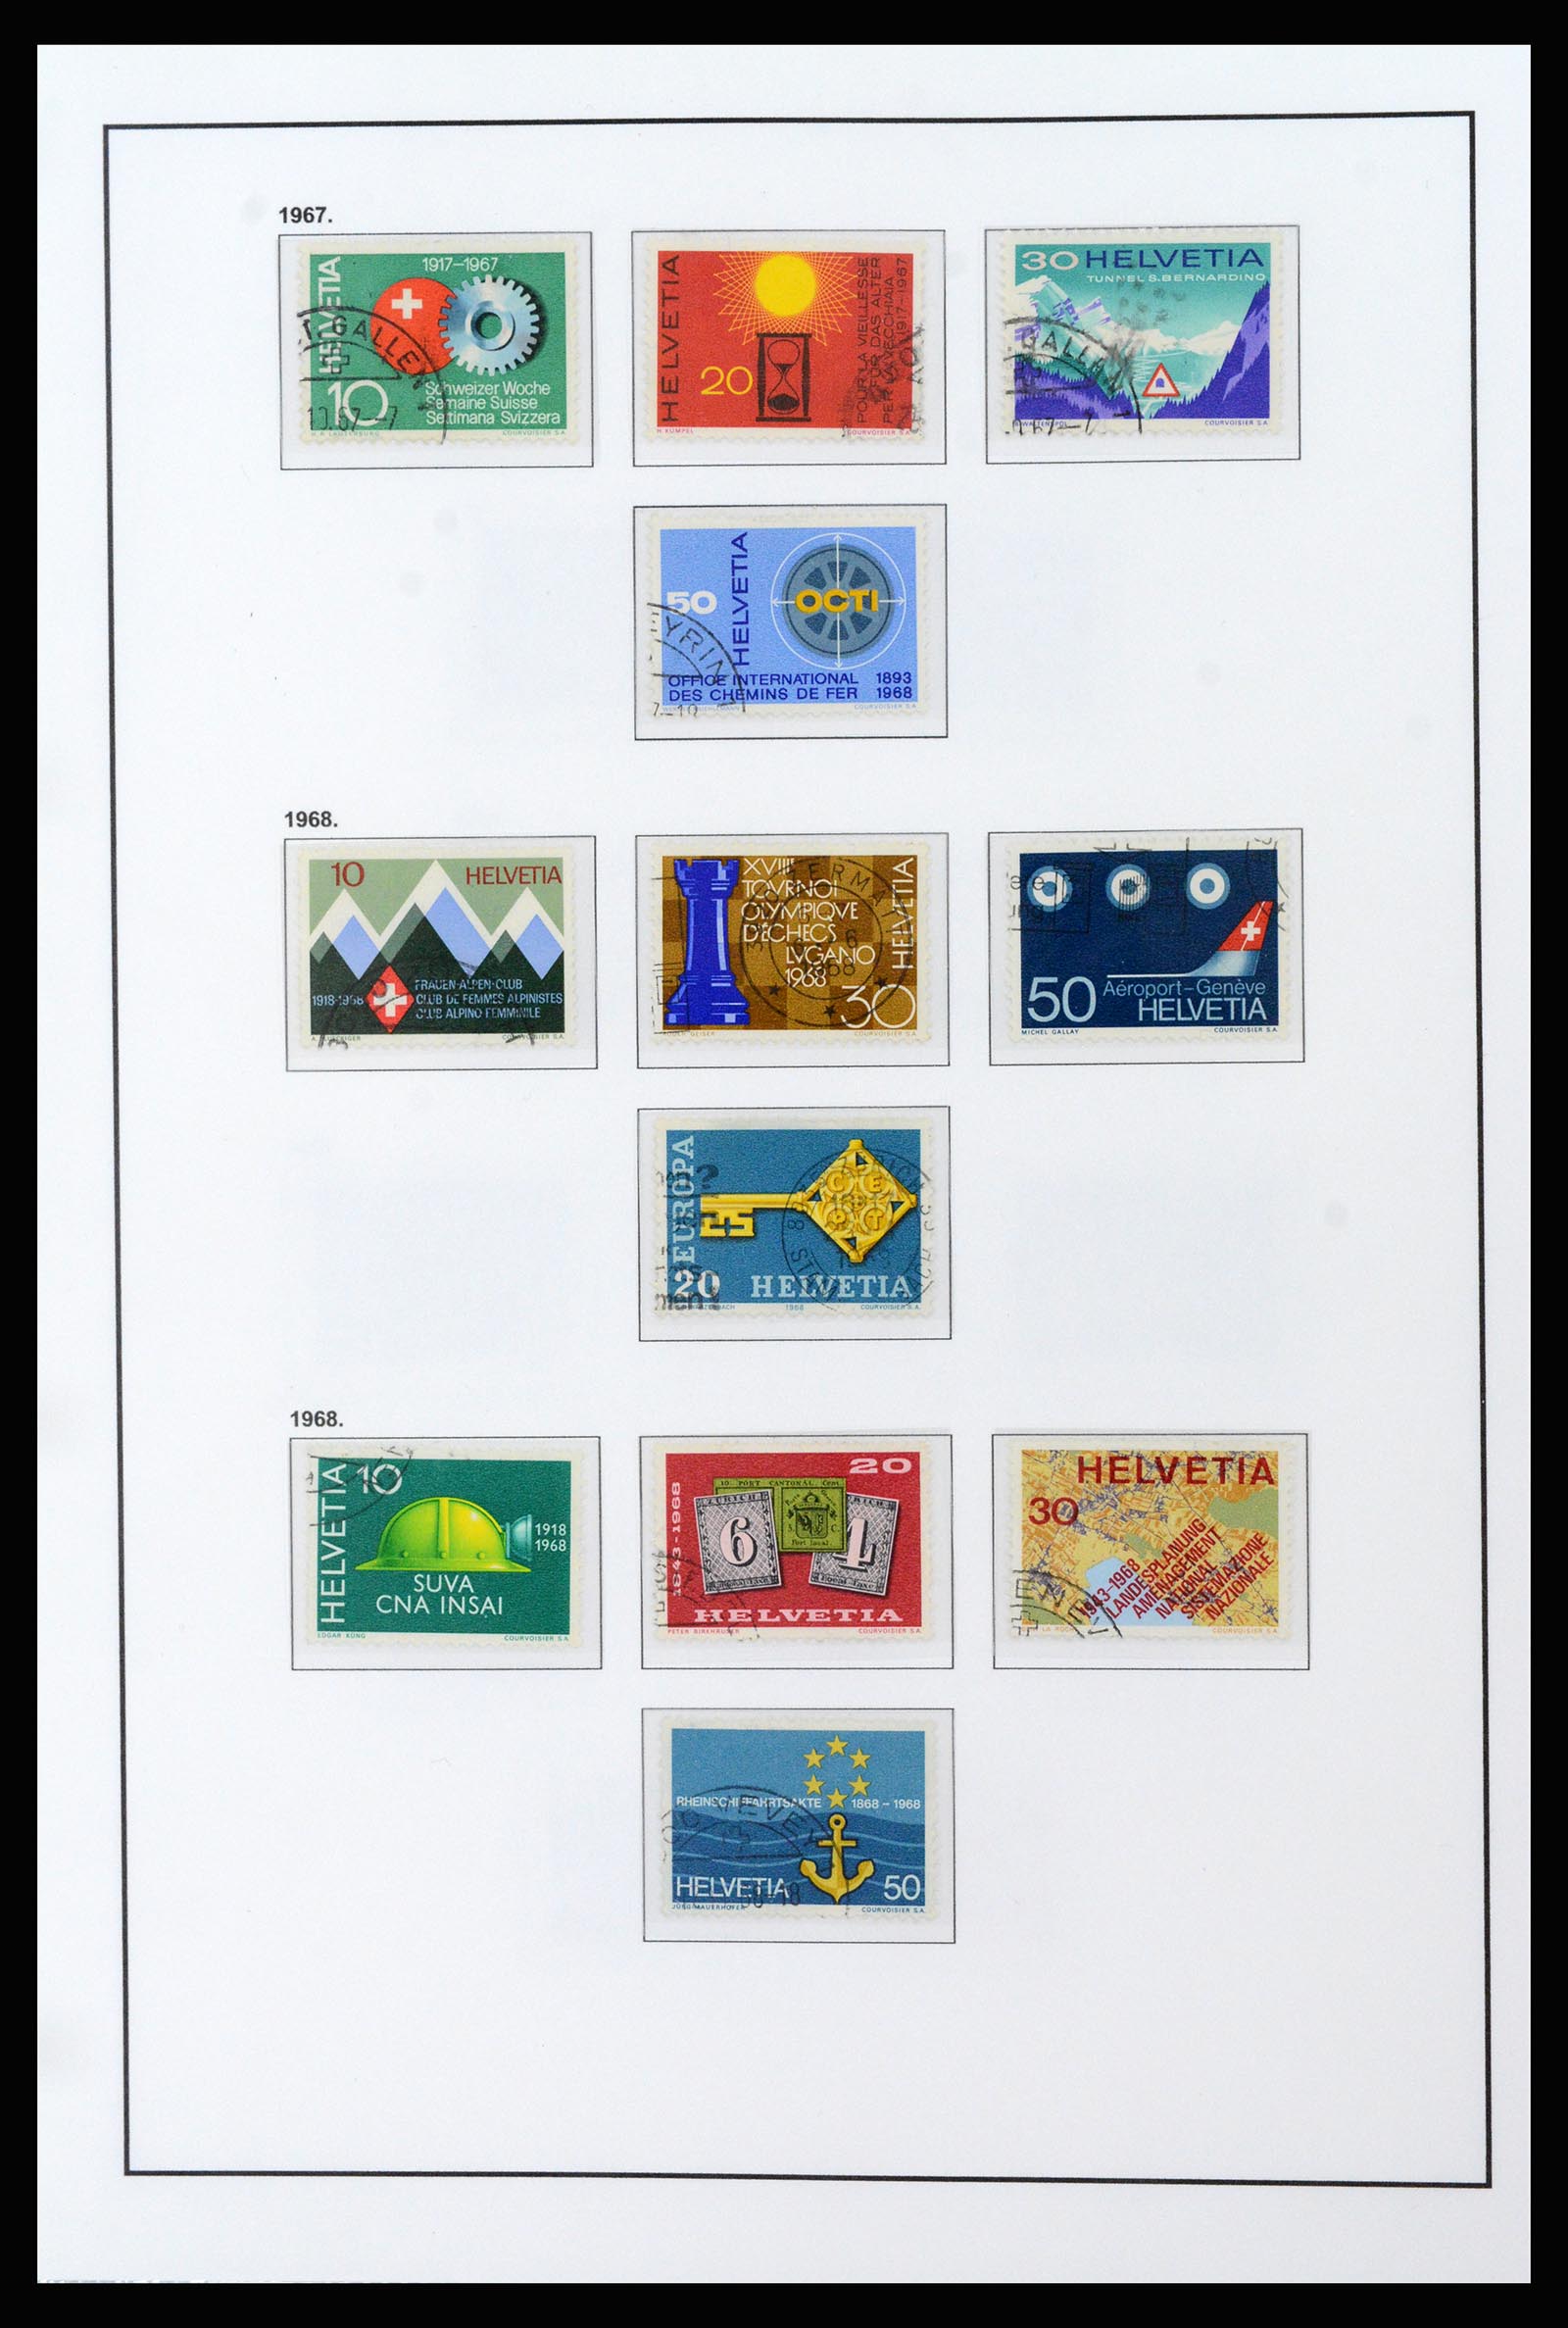 37225 027 - Stamp collection 37225 Switzerland 1854-2020.